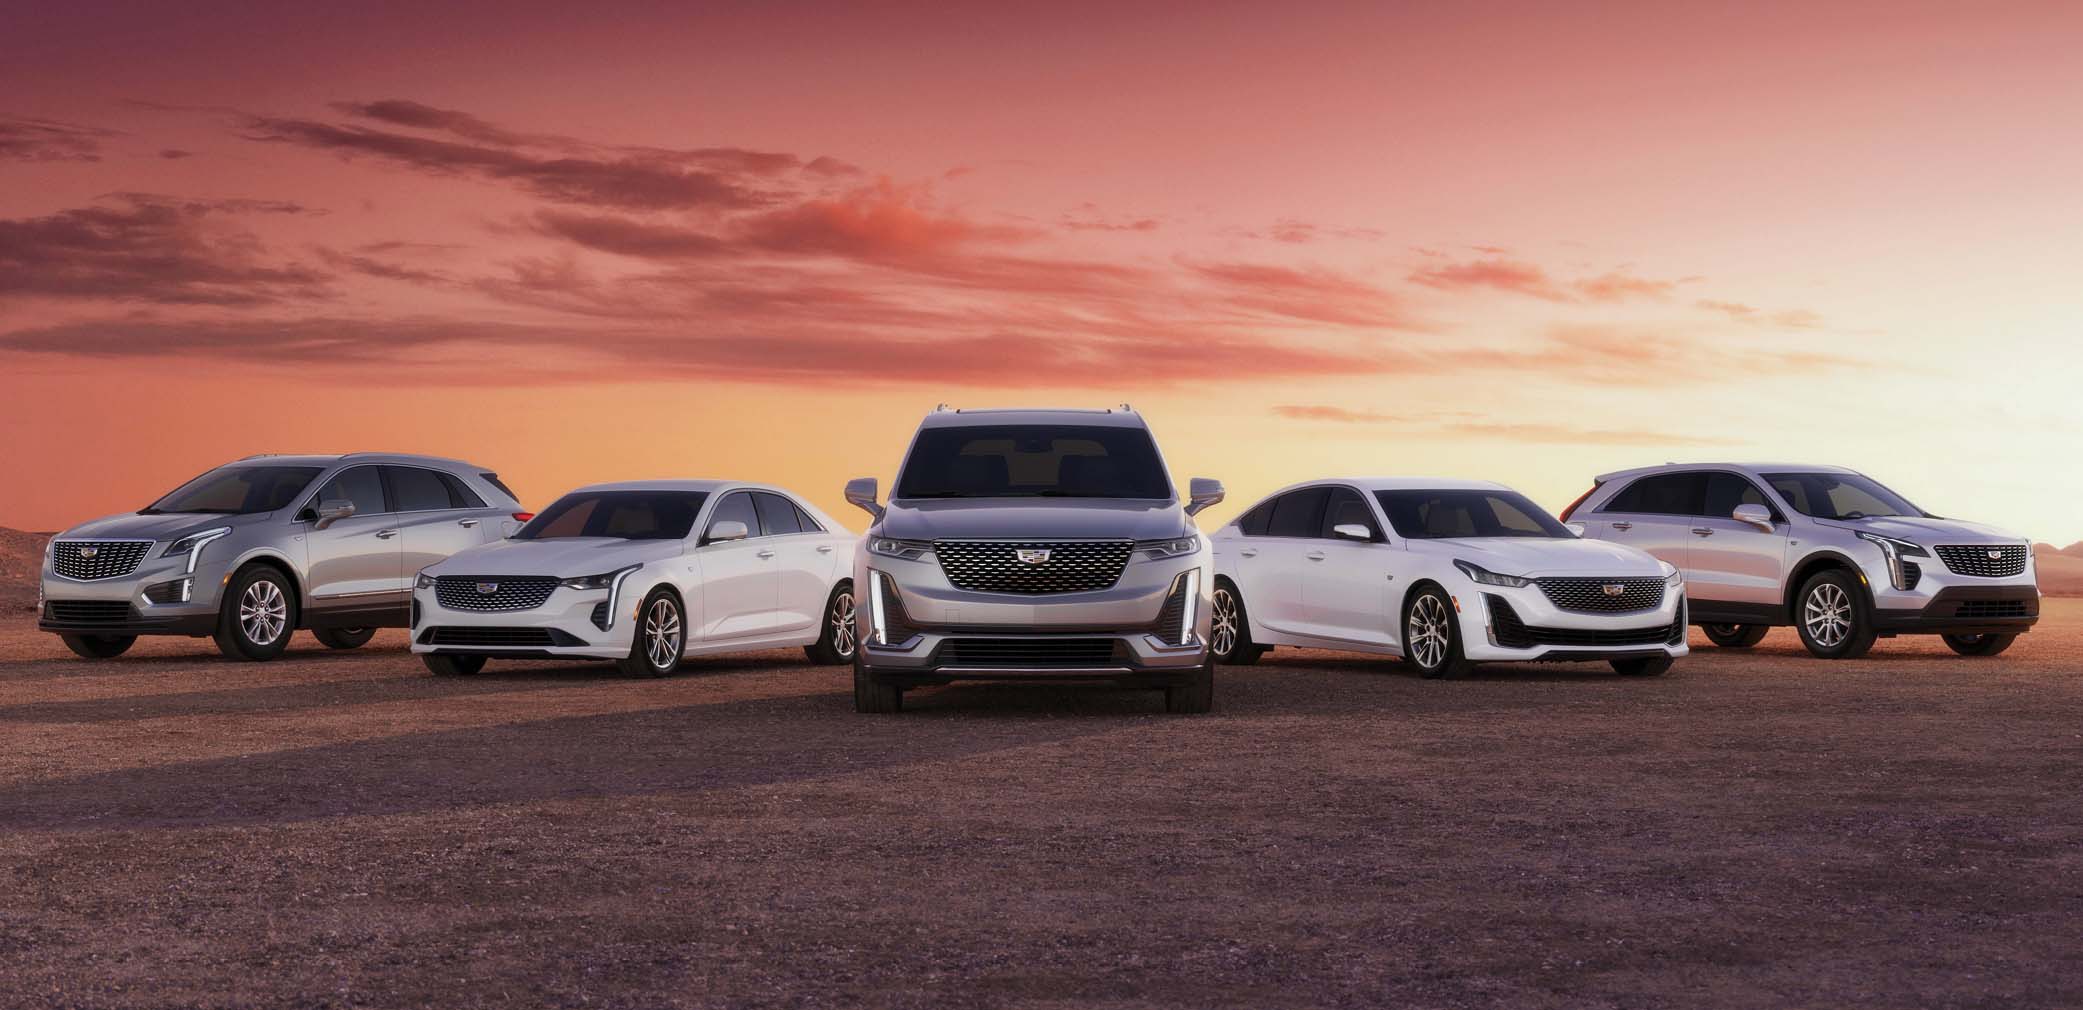 Cadillac model lineup